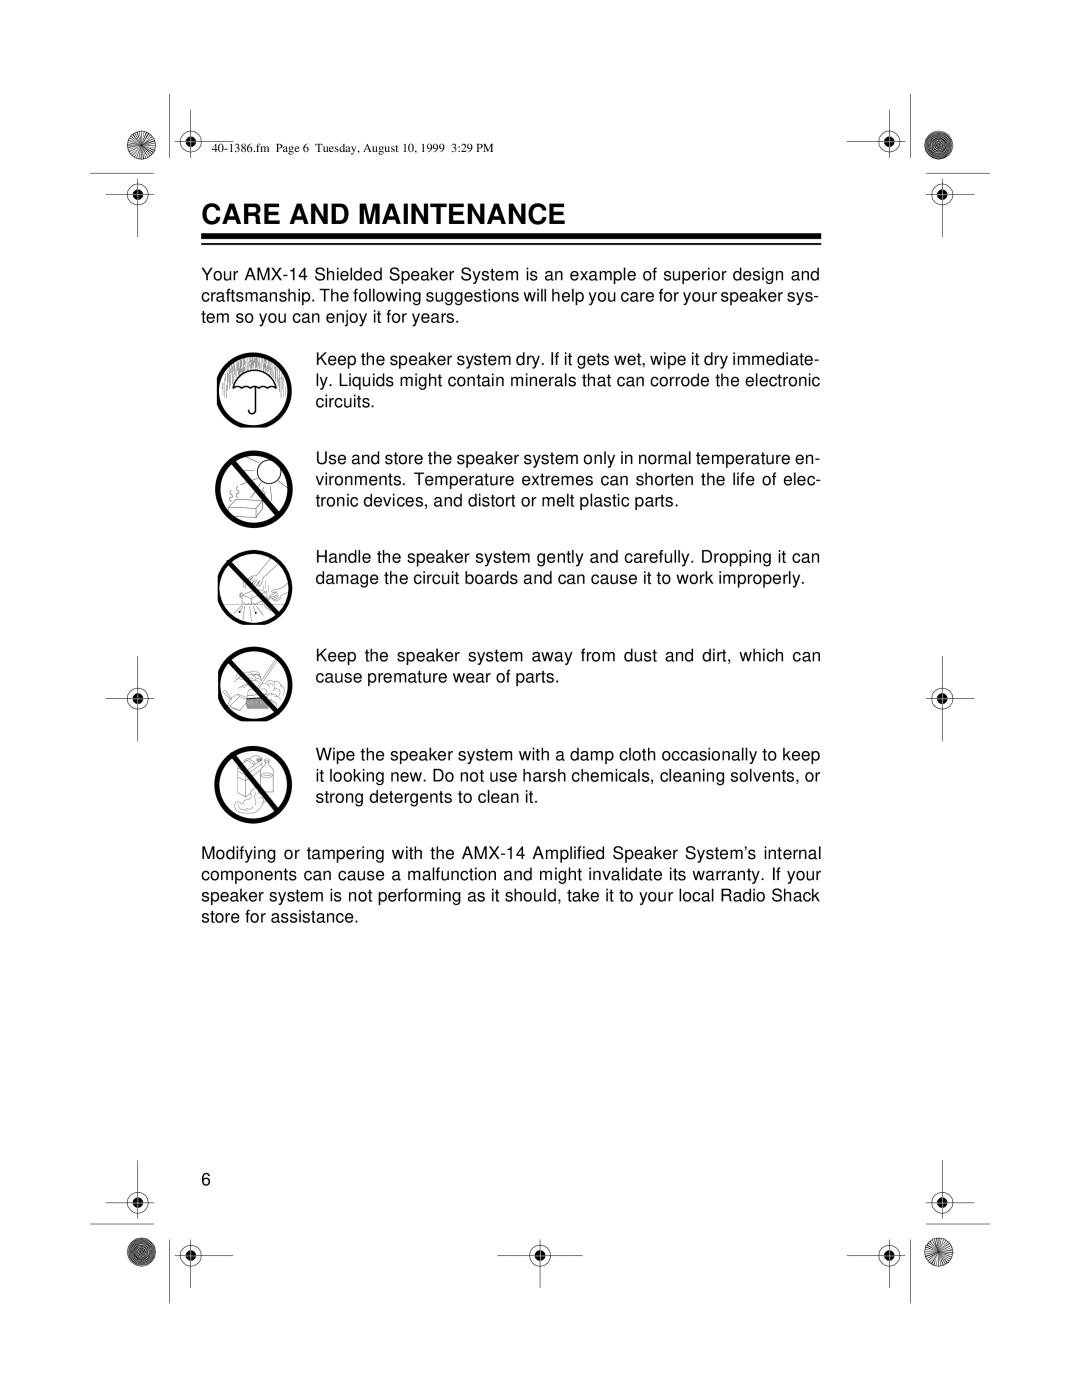 Radio Shack AMX-14 owner manual Care And Maintenance 